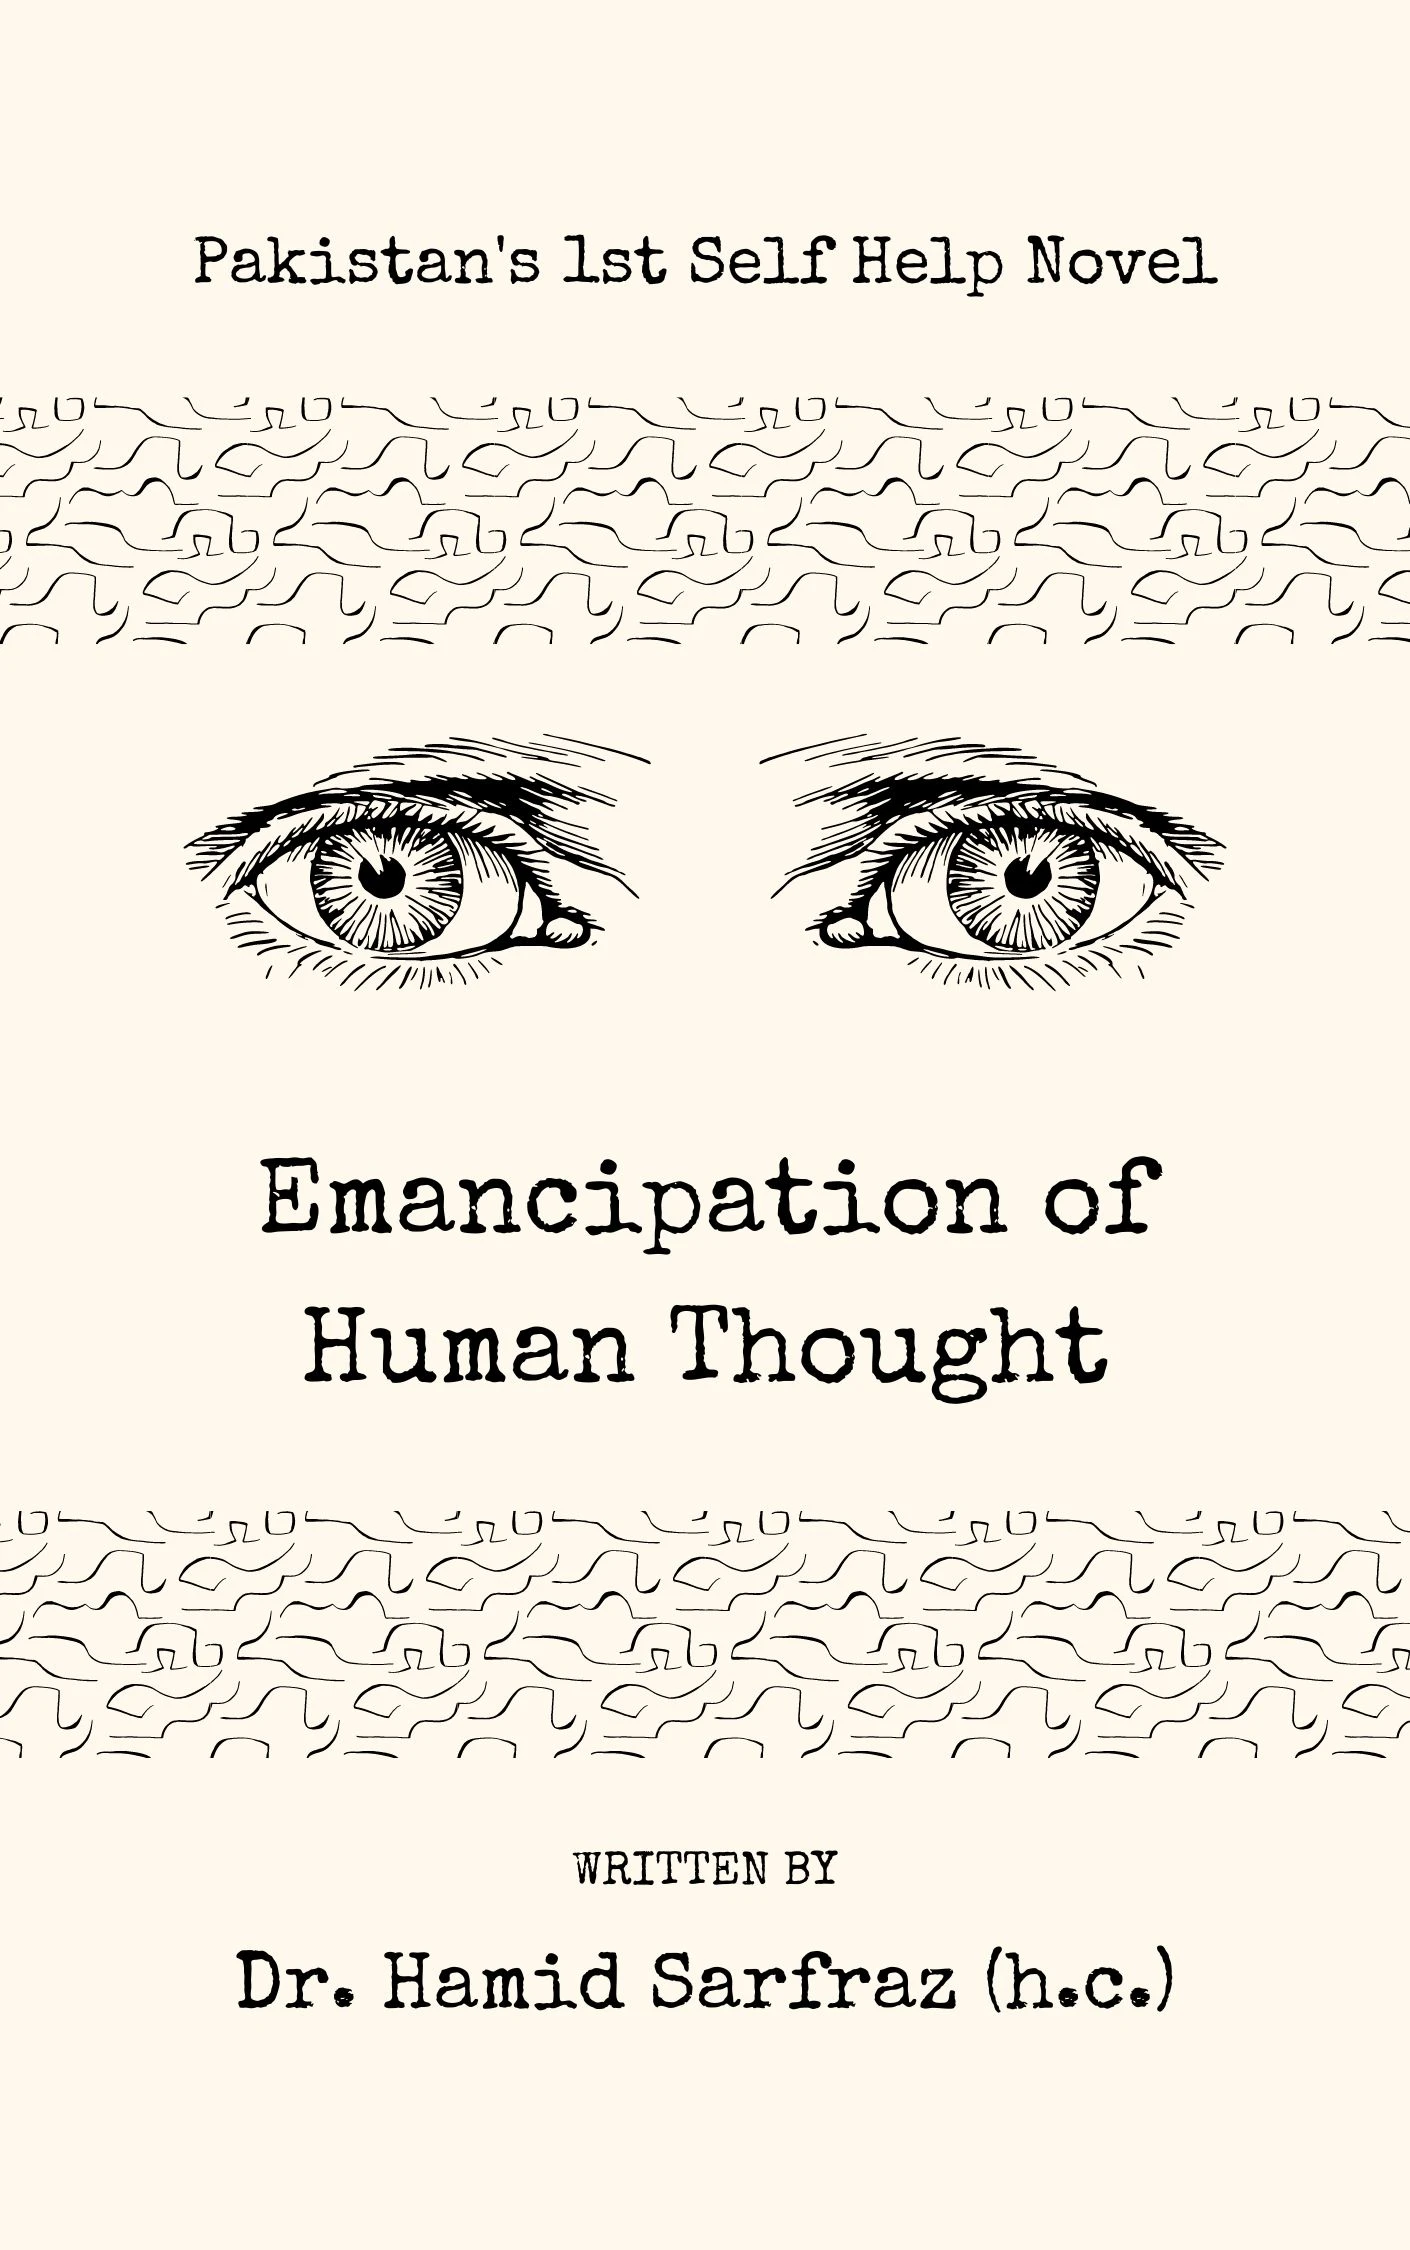 Emancipation of Human Thought